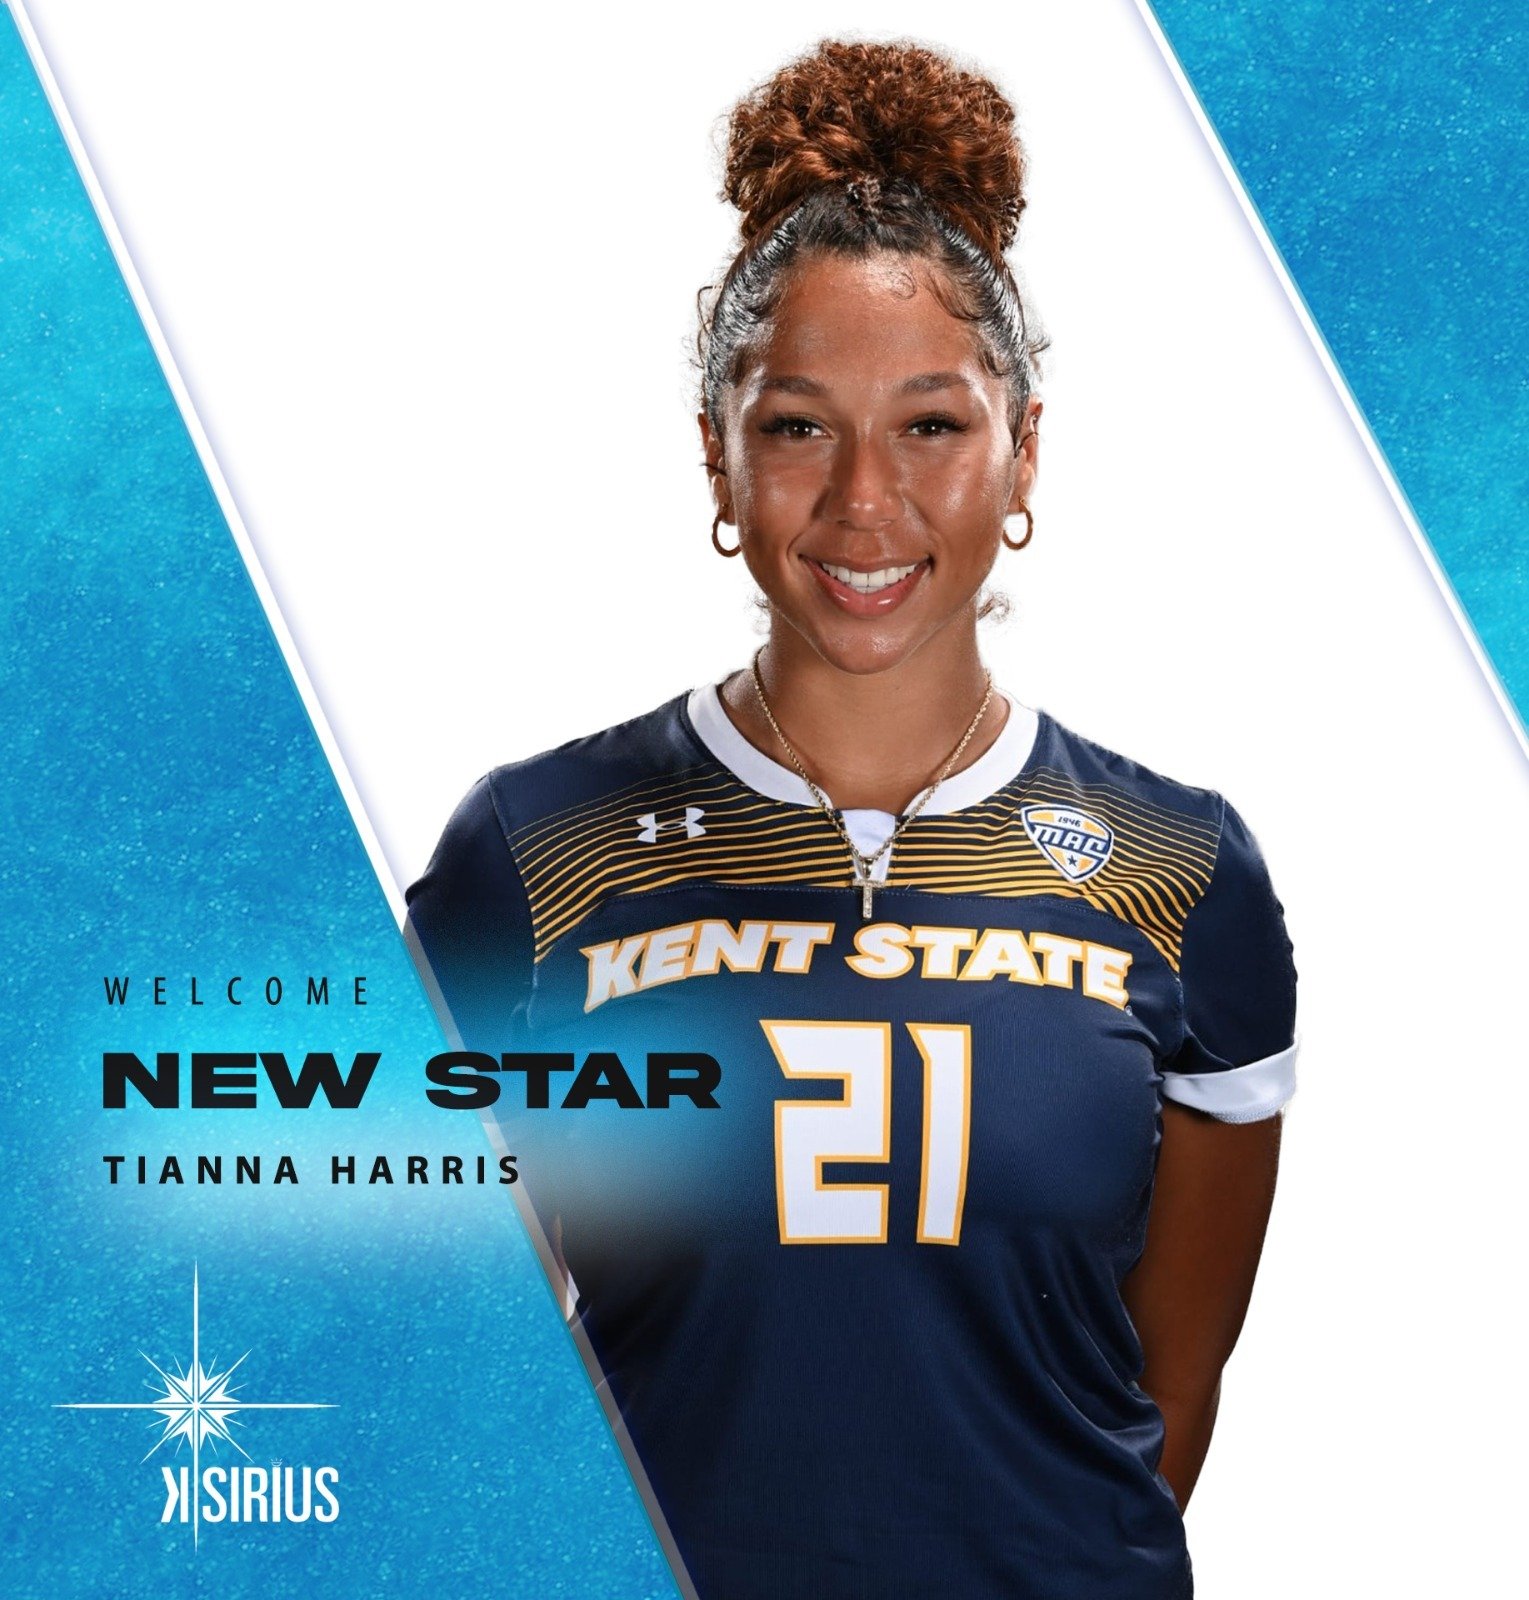 New Star: Tianna Harris